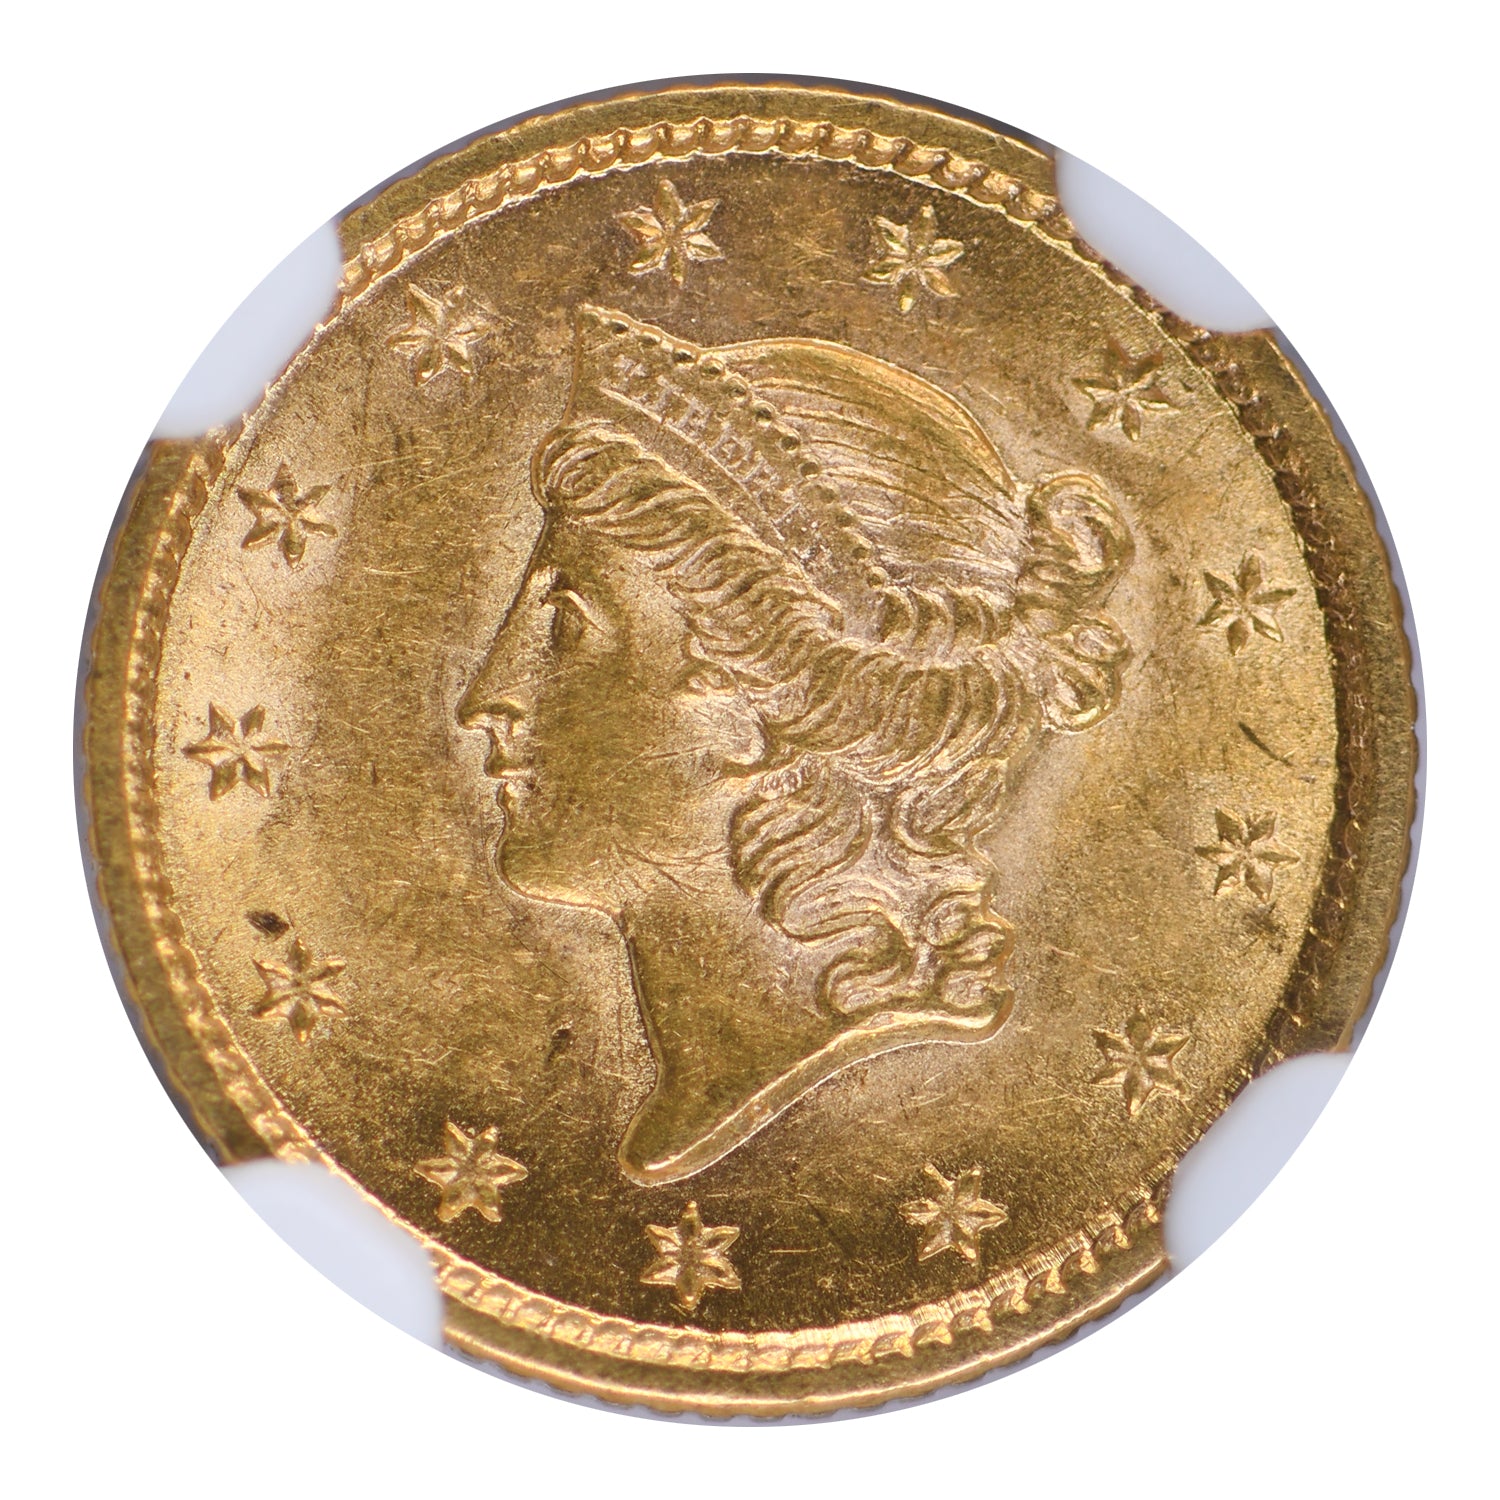 1853 $1 Gold Liberty Head NGC MS61